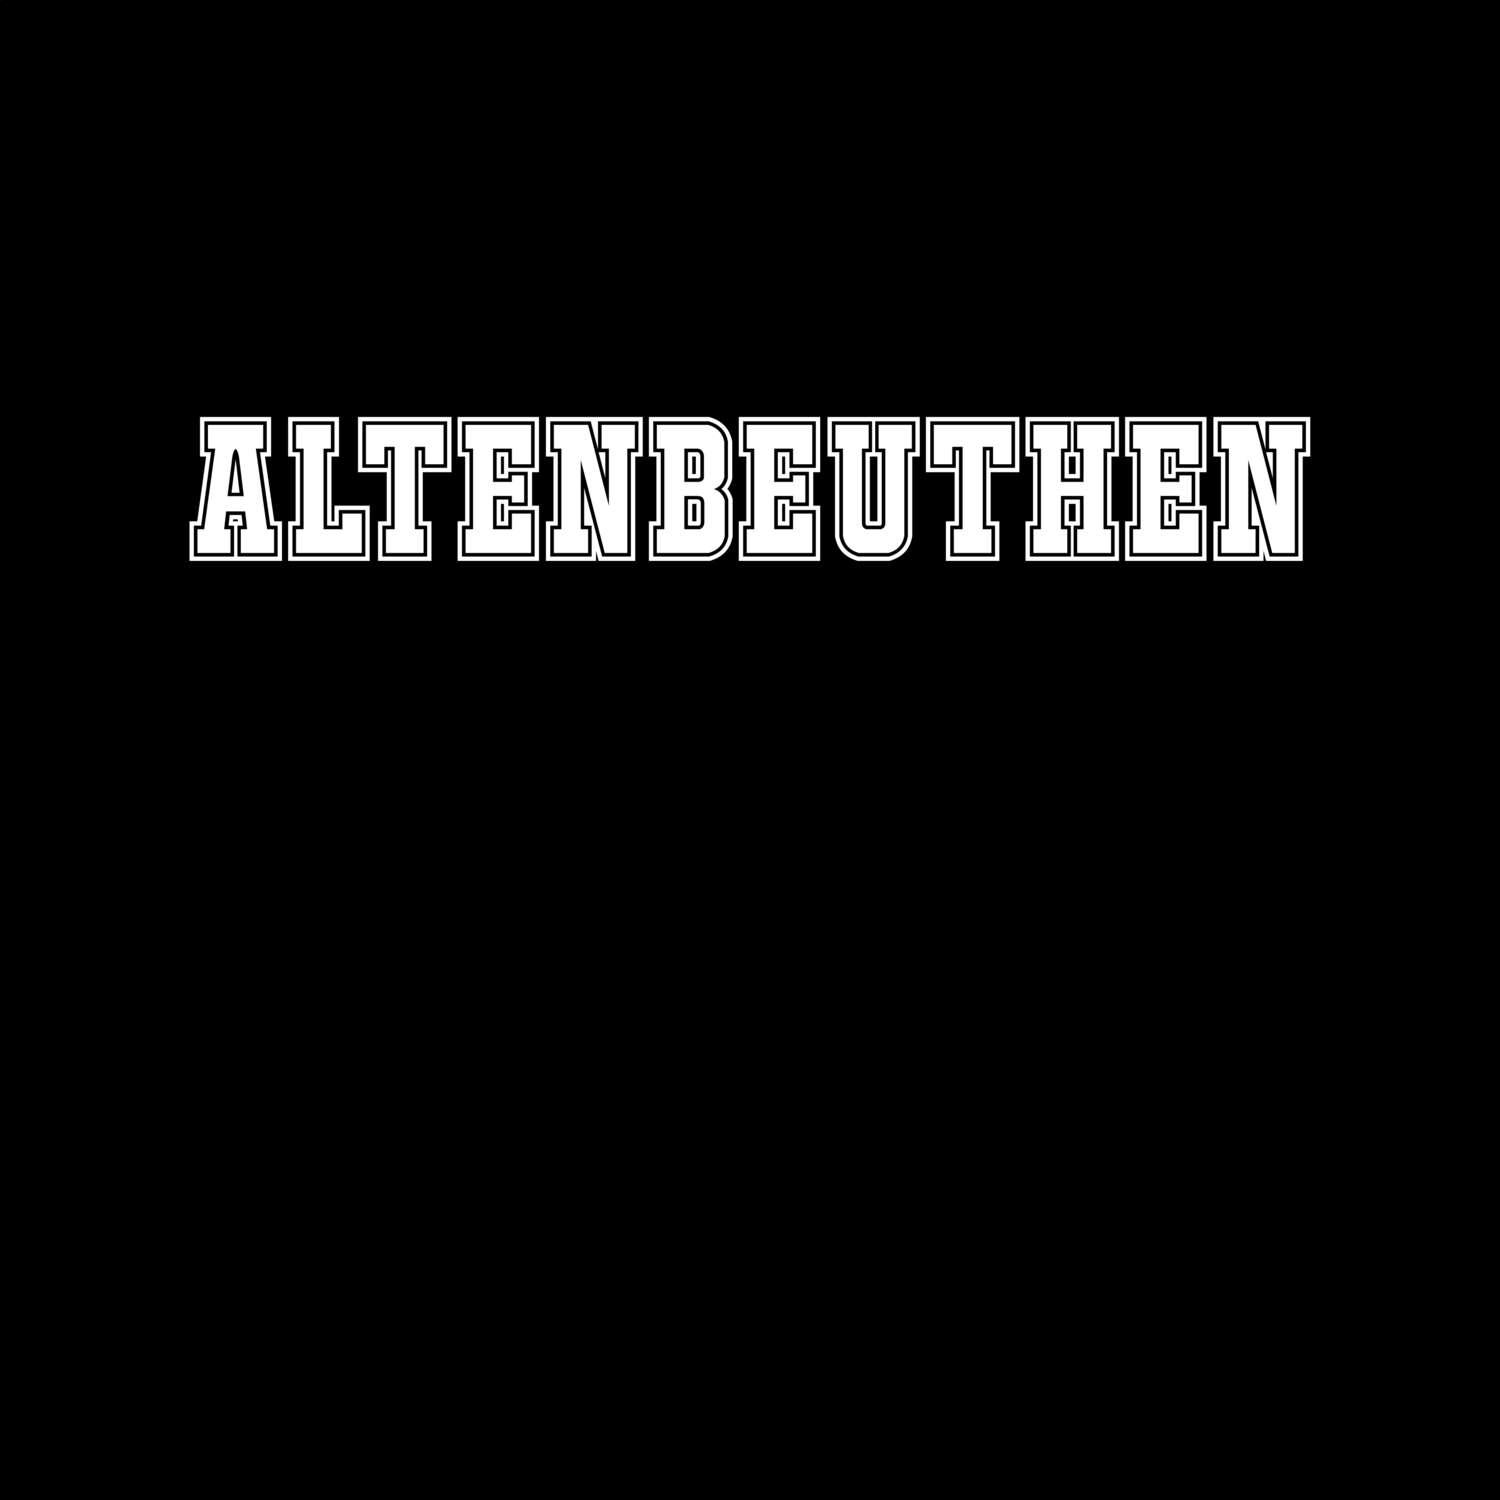 Altenbeuthen T-Shirt »Classic«